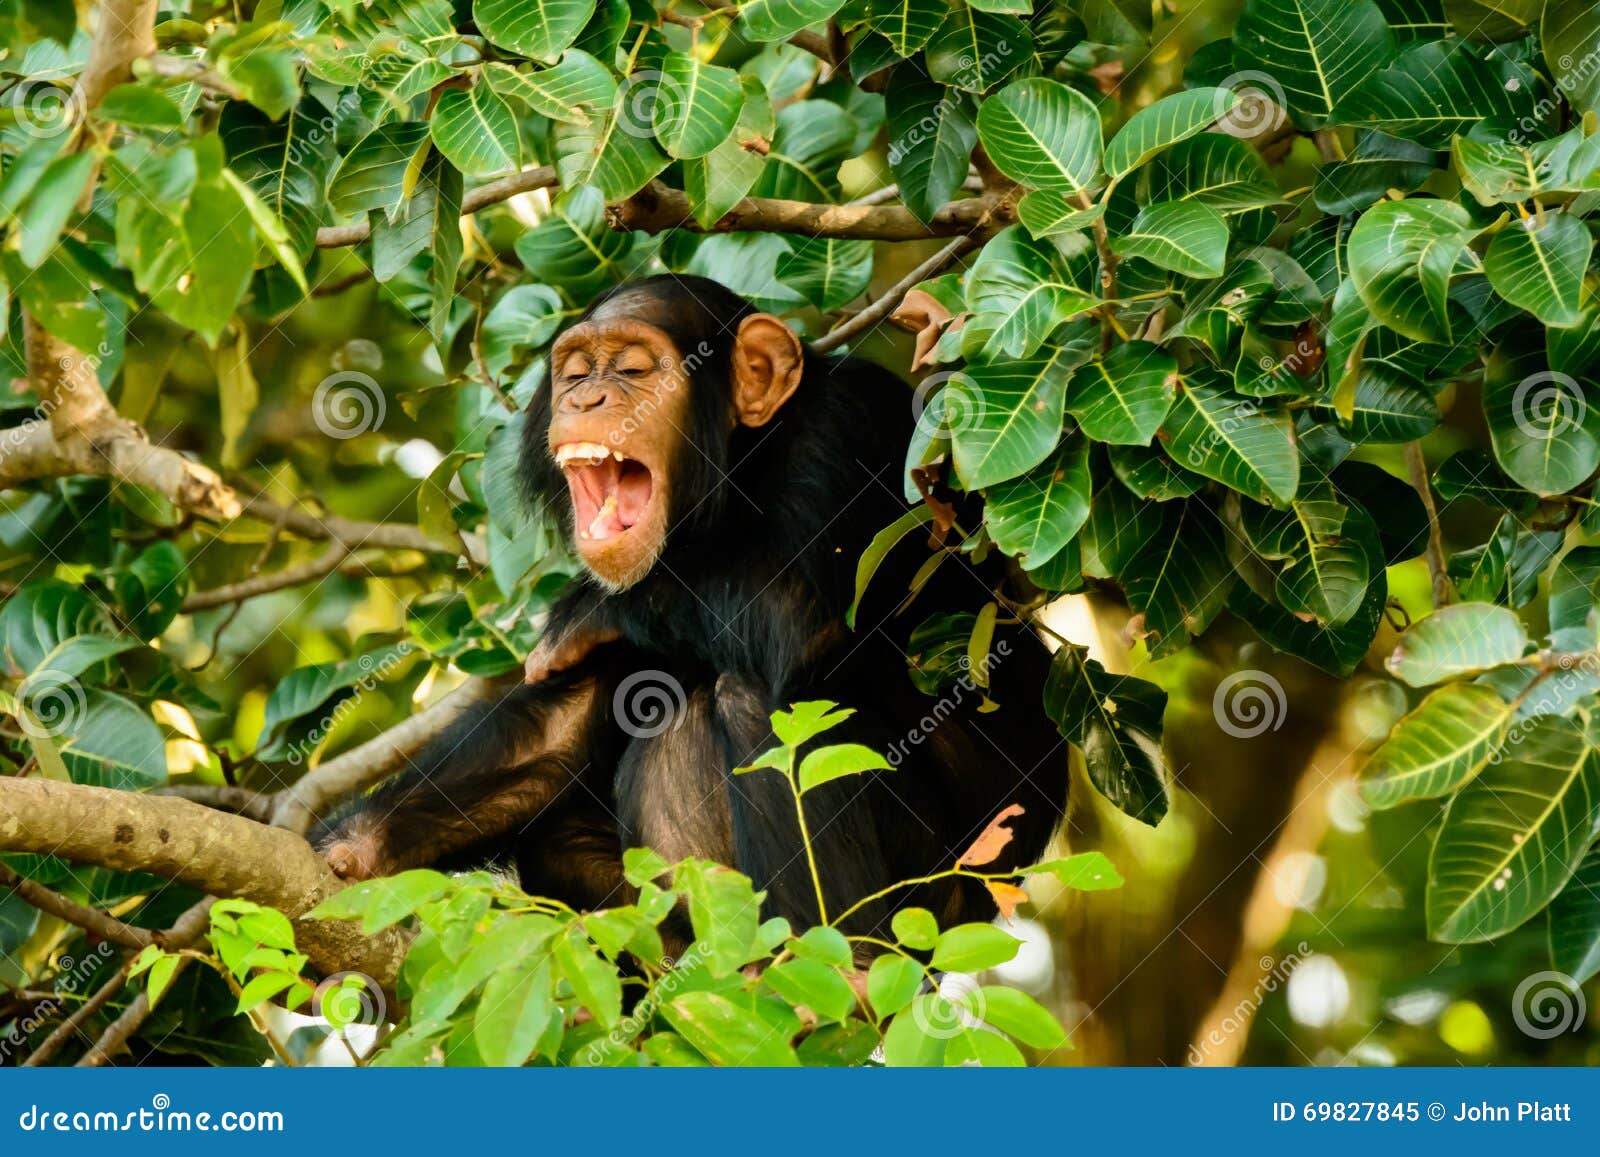 chimp having a good laugh